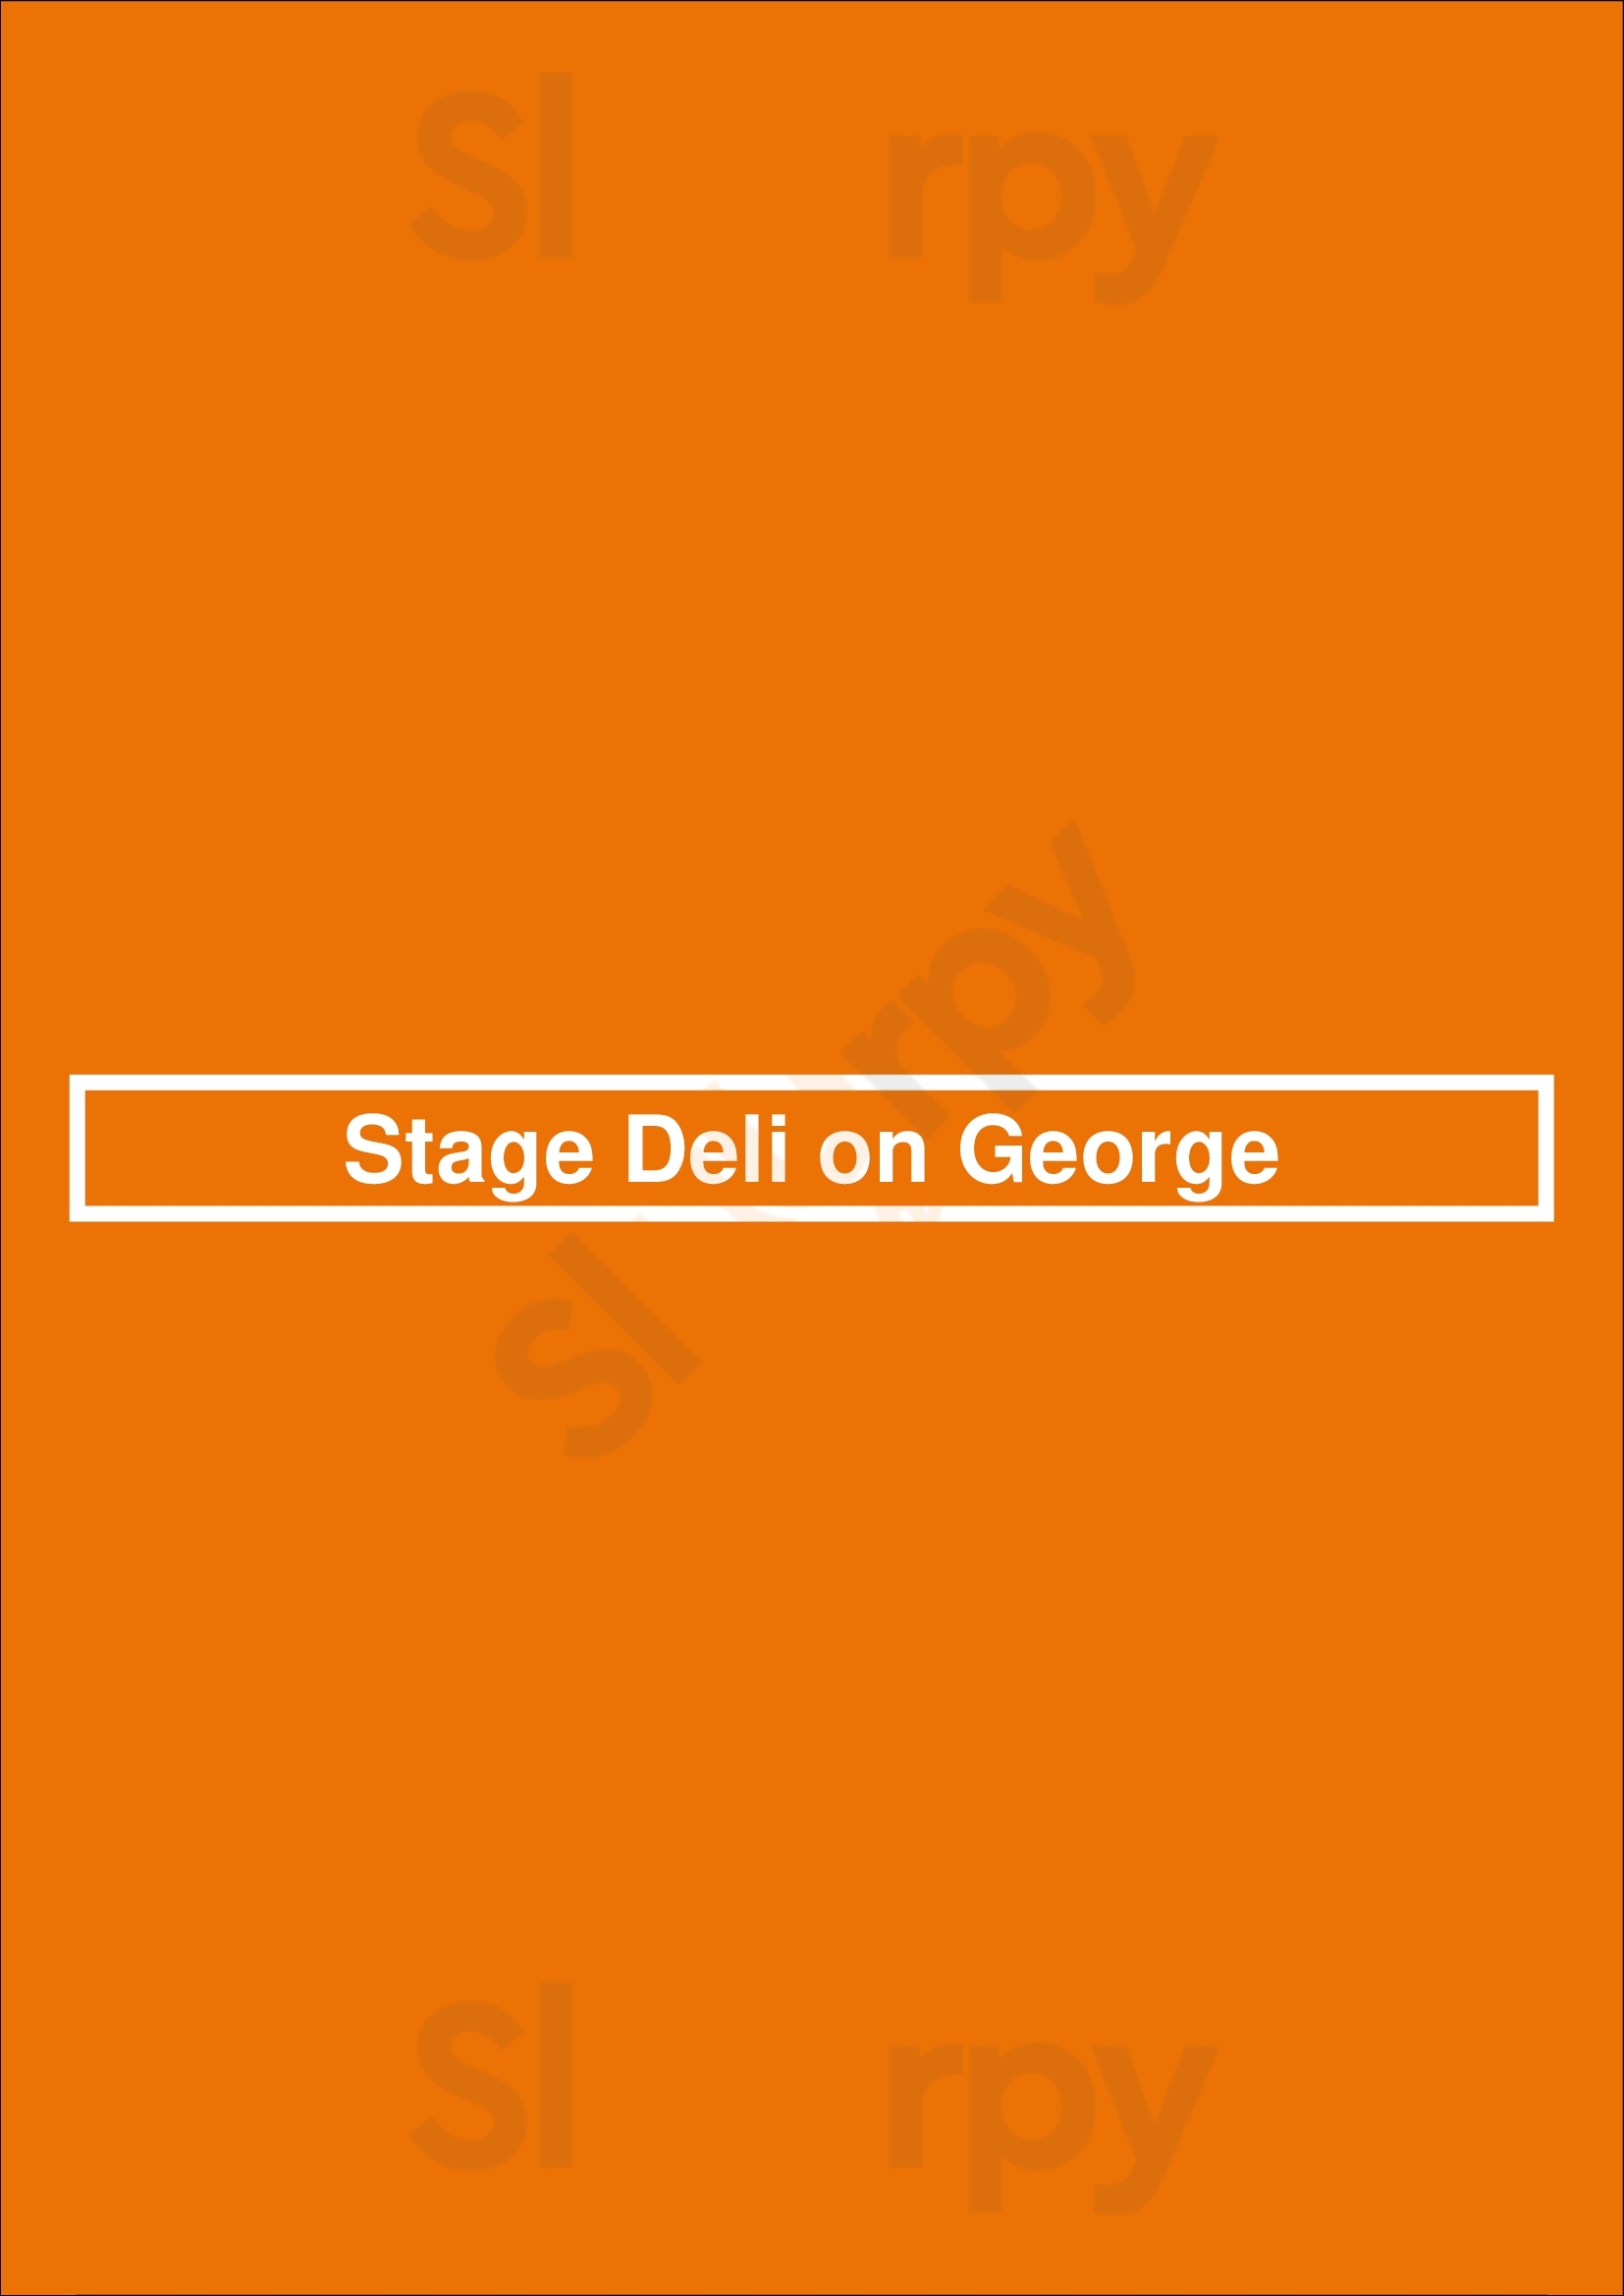 Stage Deli On George York Menu - 1